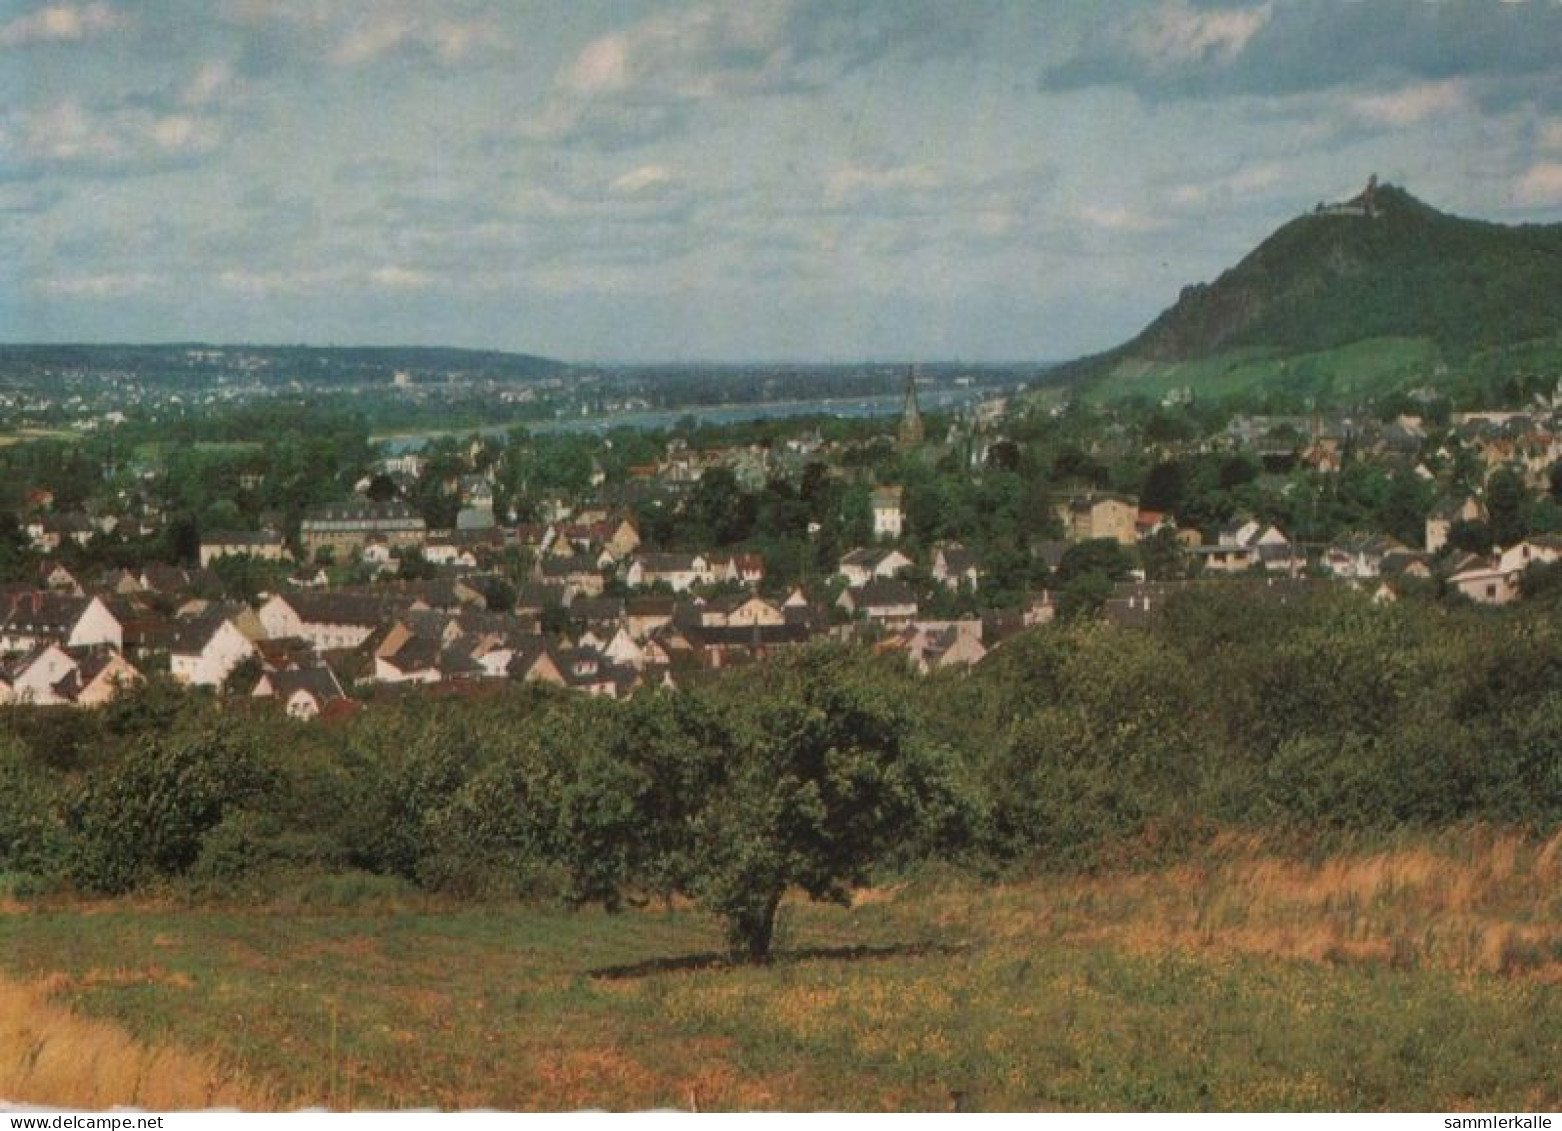 109238 - Bad Honnef - Mit Drachenfels - Bad Honnef